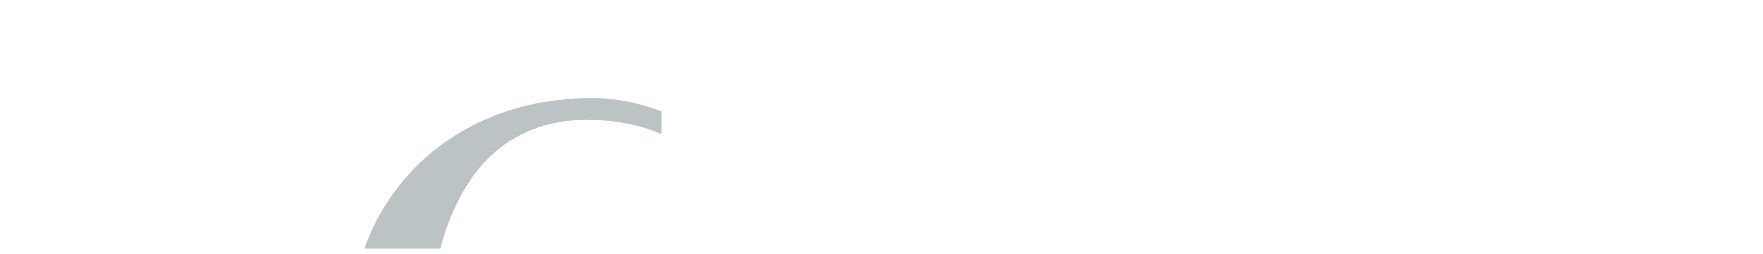 Western Alliance Bank